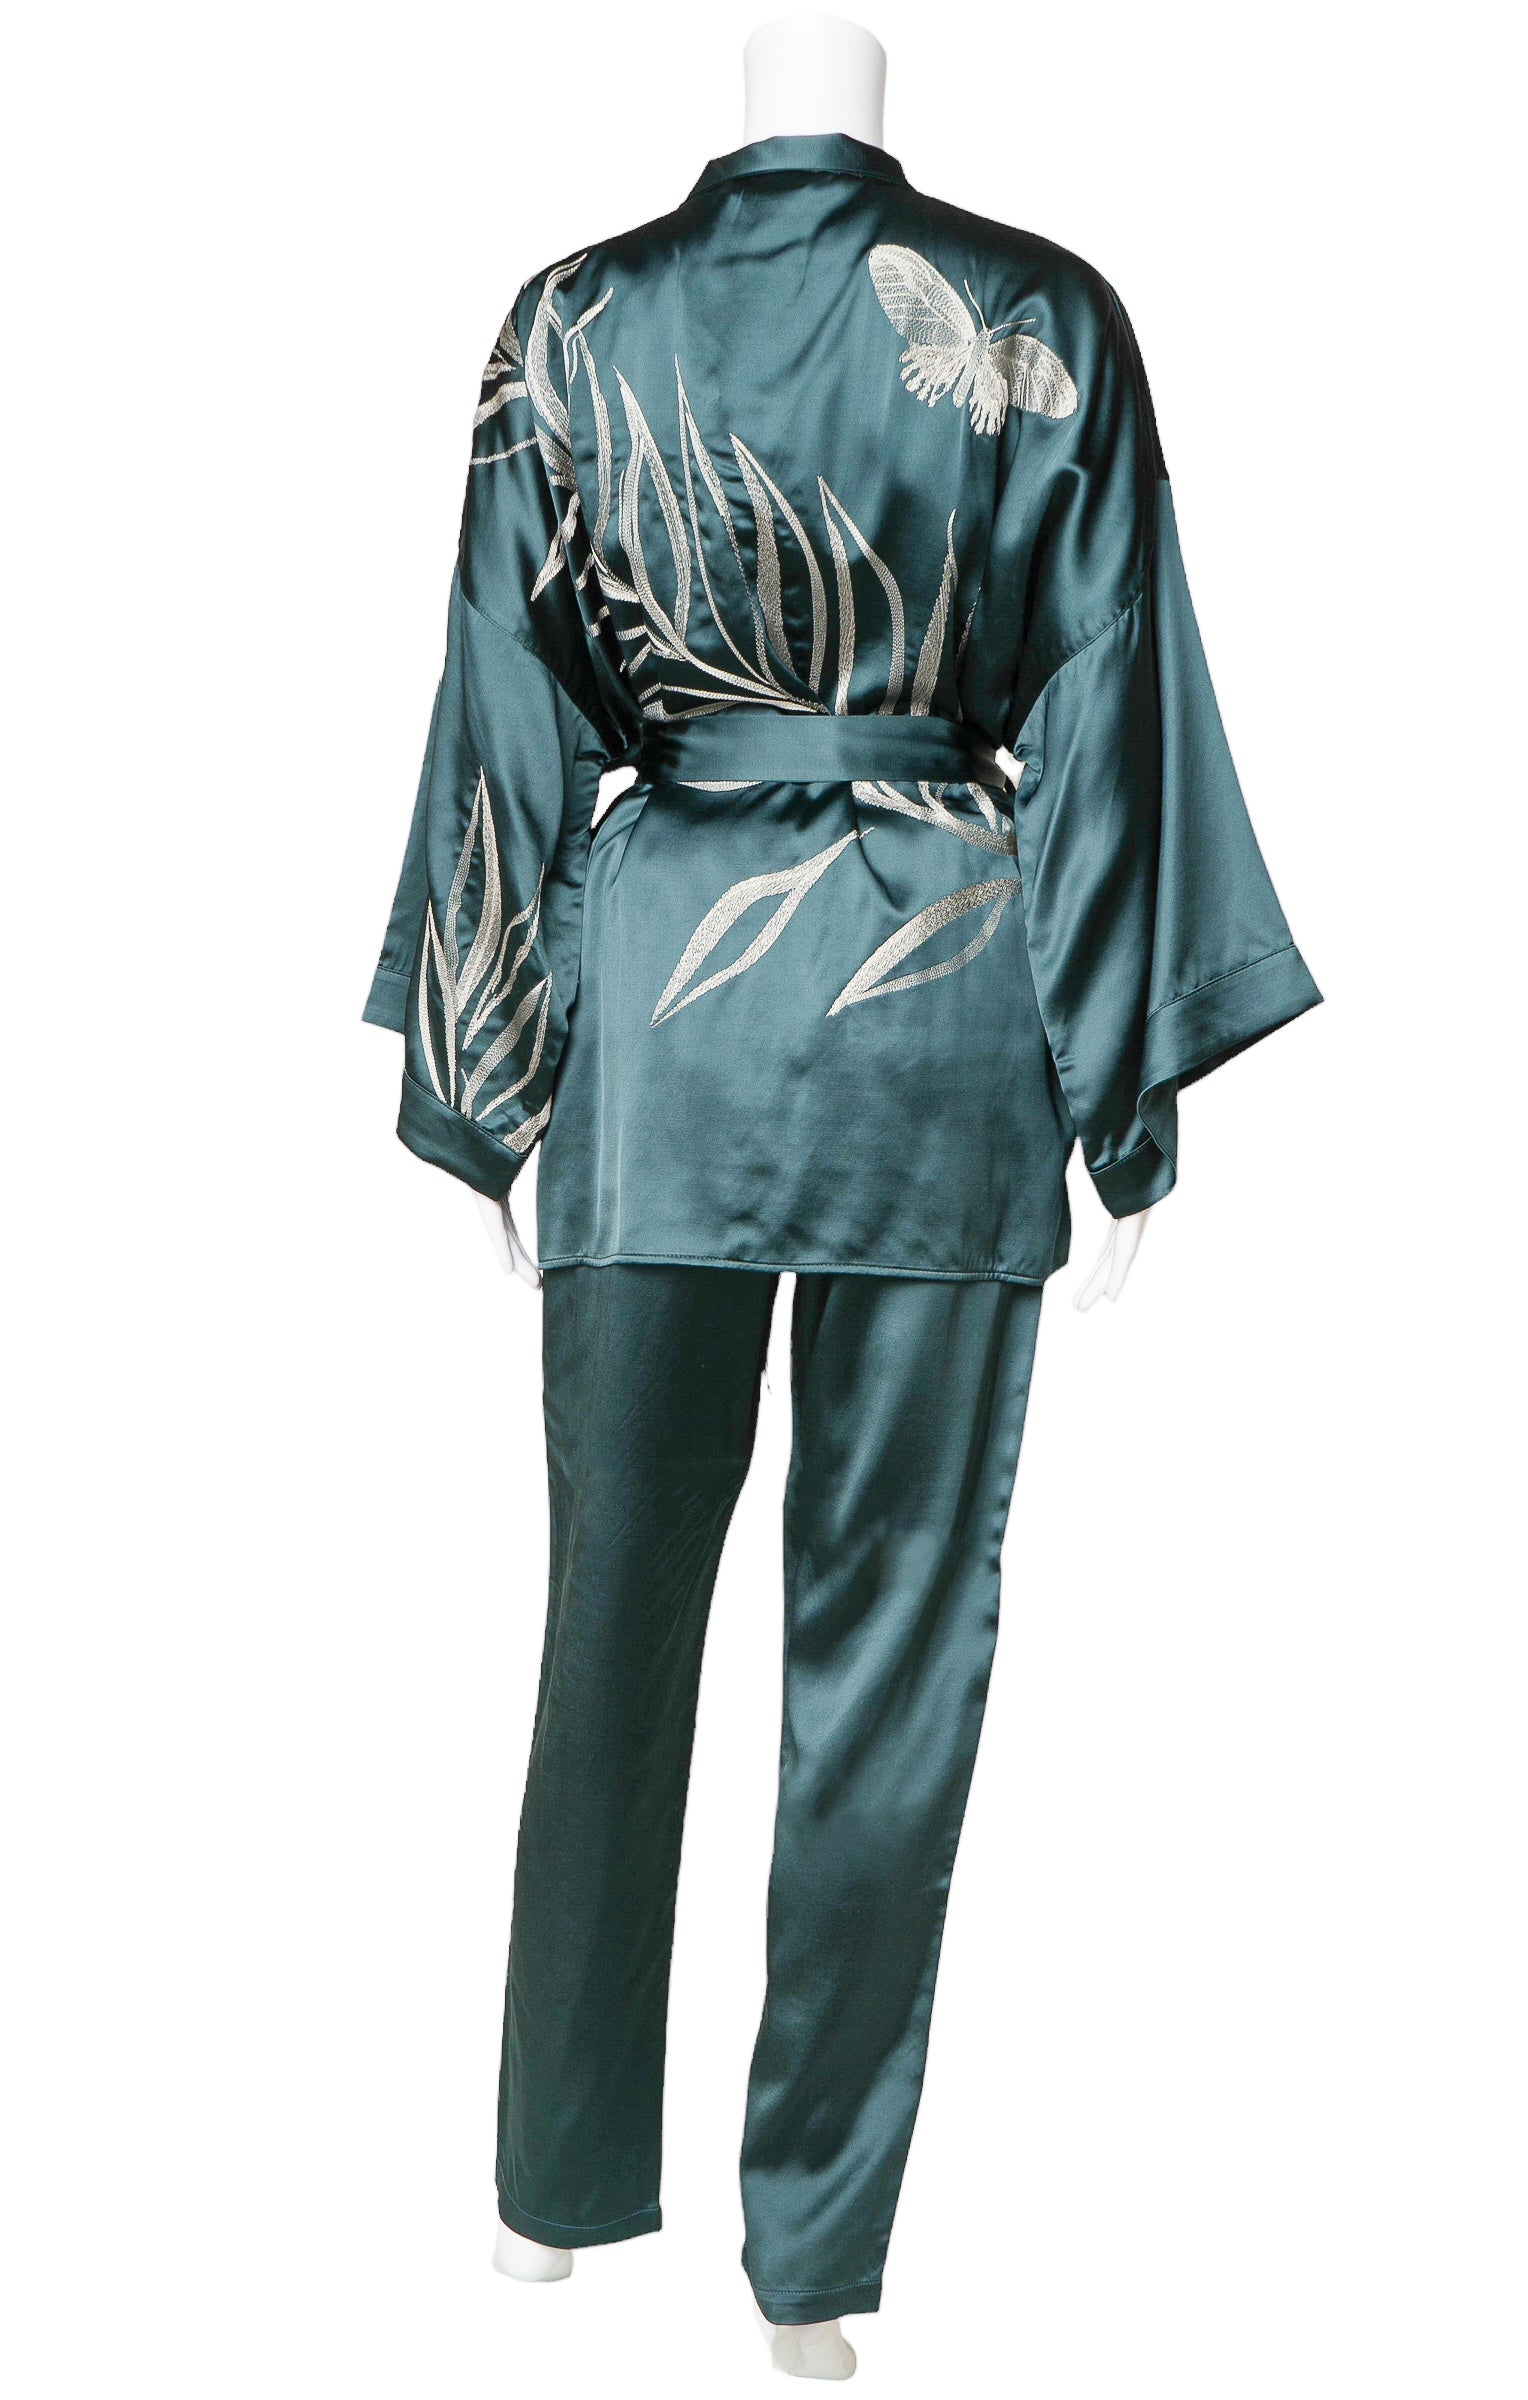 MORPHO + LUNA (RARE & NEW) with tags Pajama Set Size: M